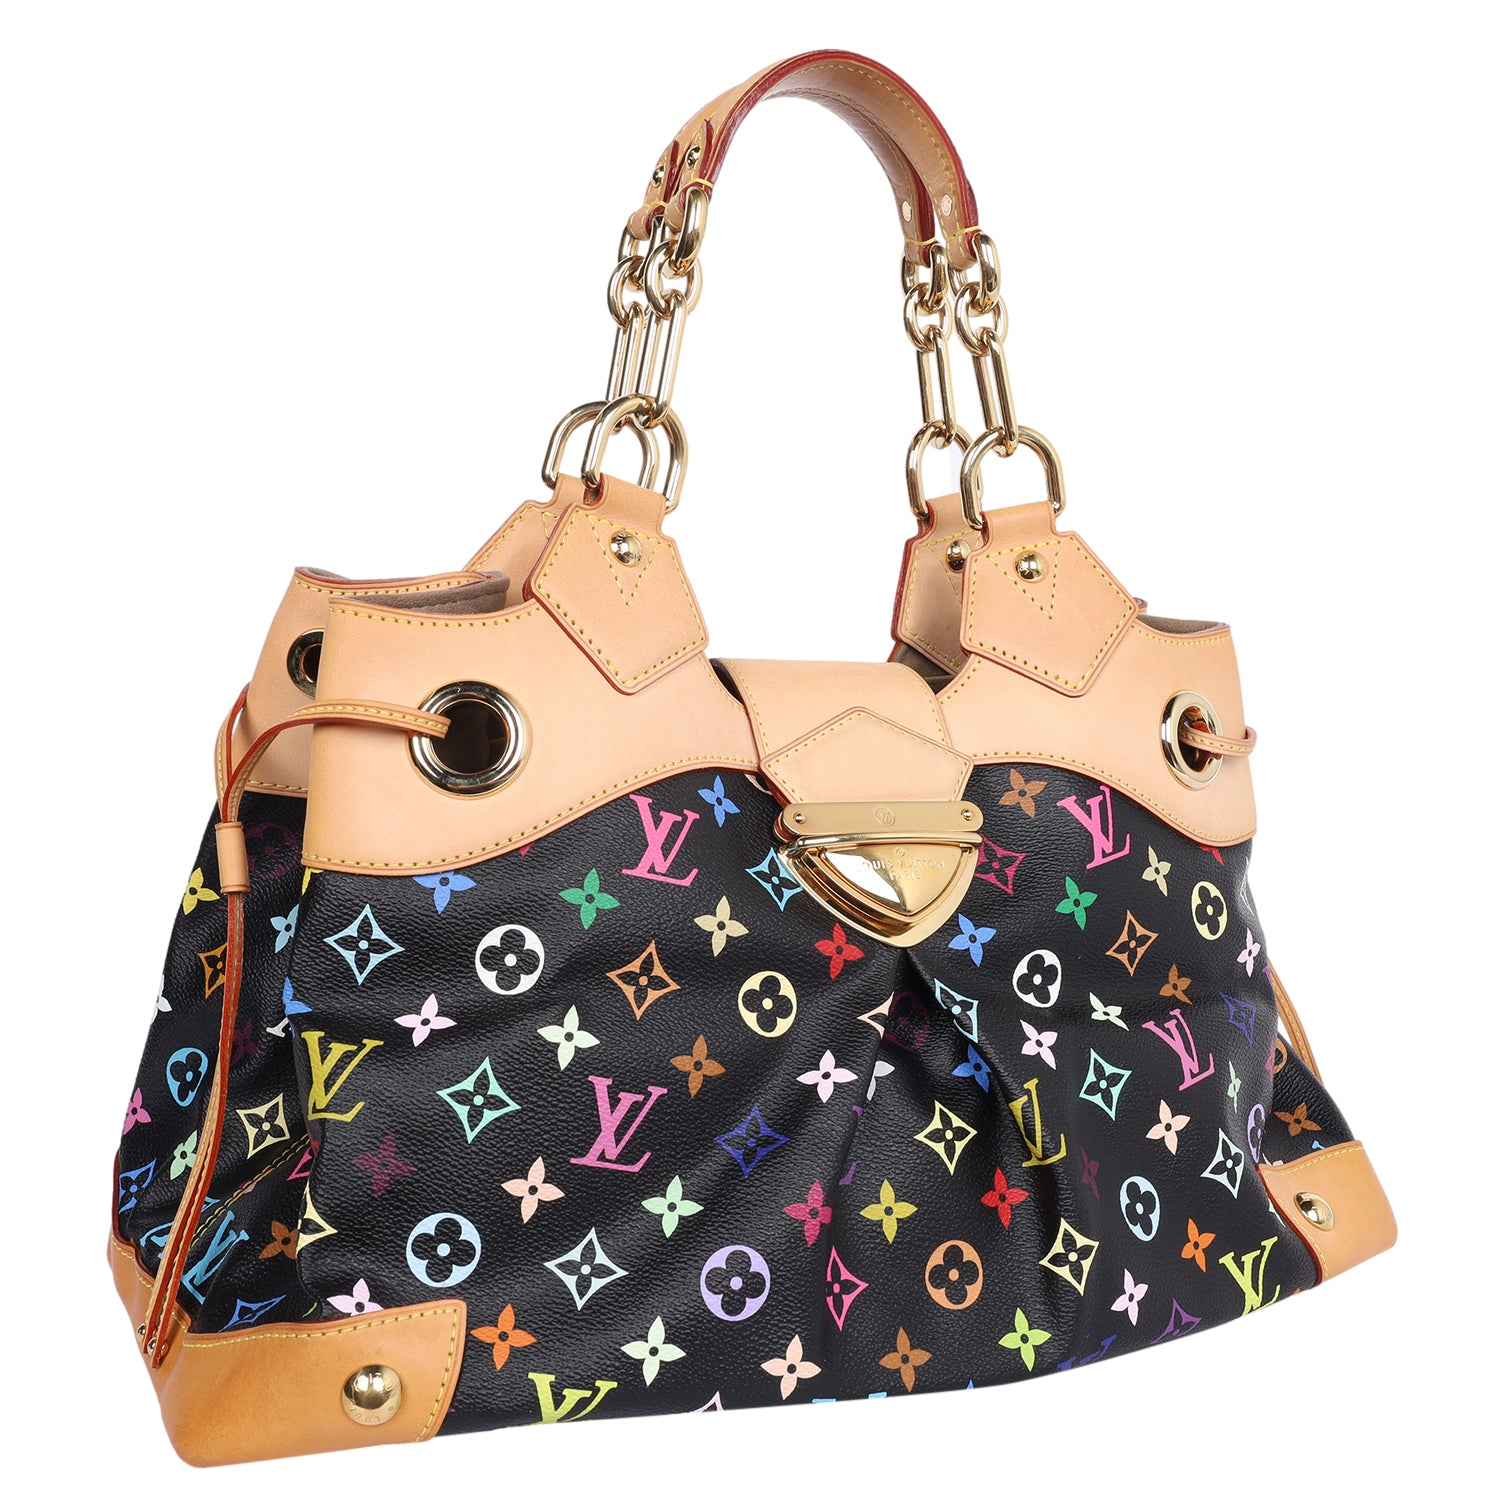 Authentic Louis Vuitton Alma Bag Black Multicolor Handbag Limited